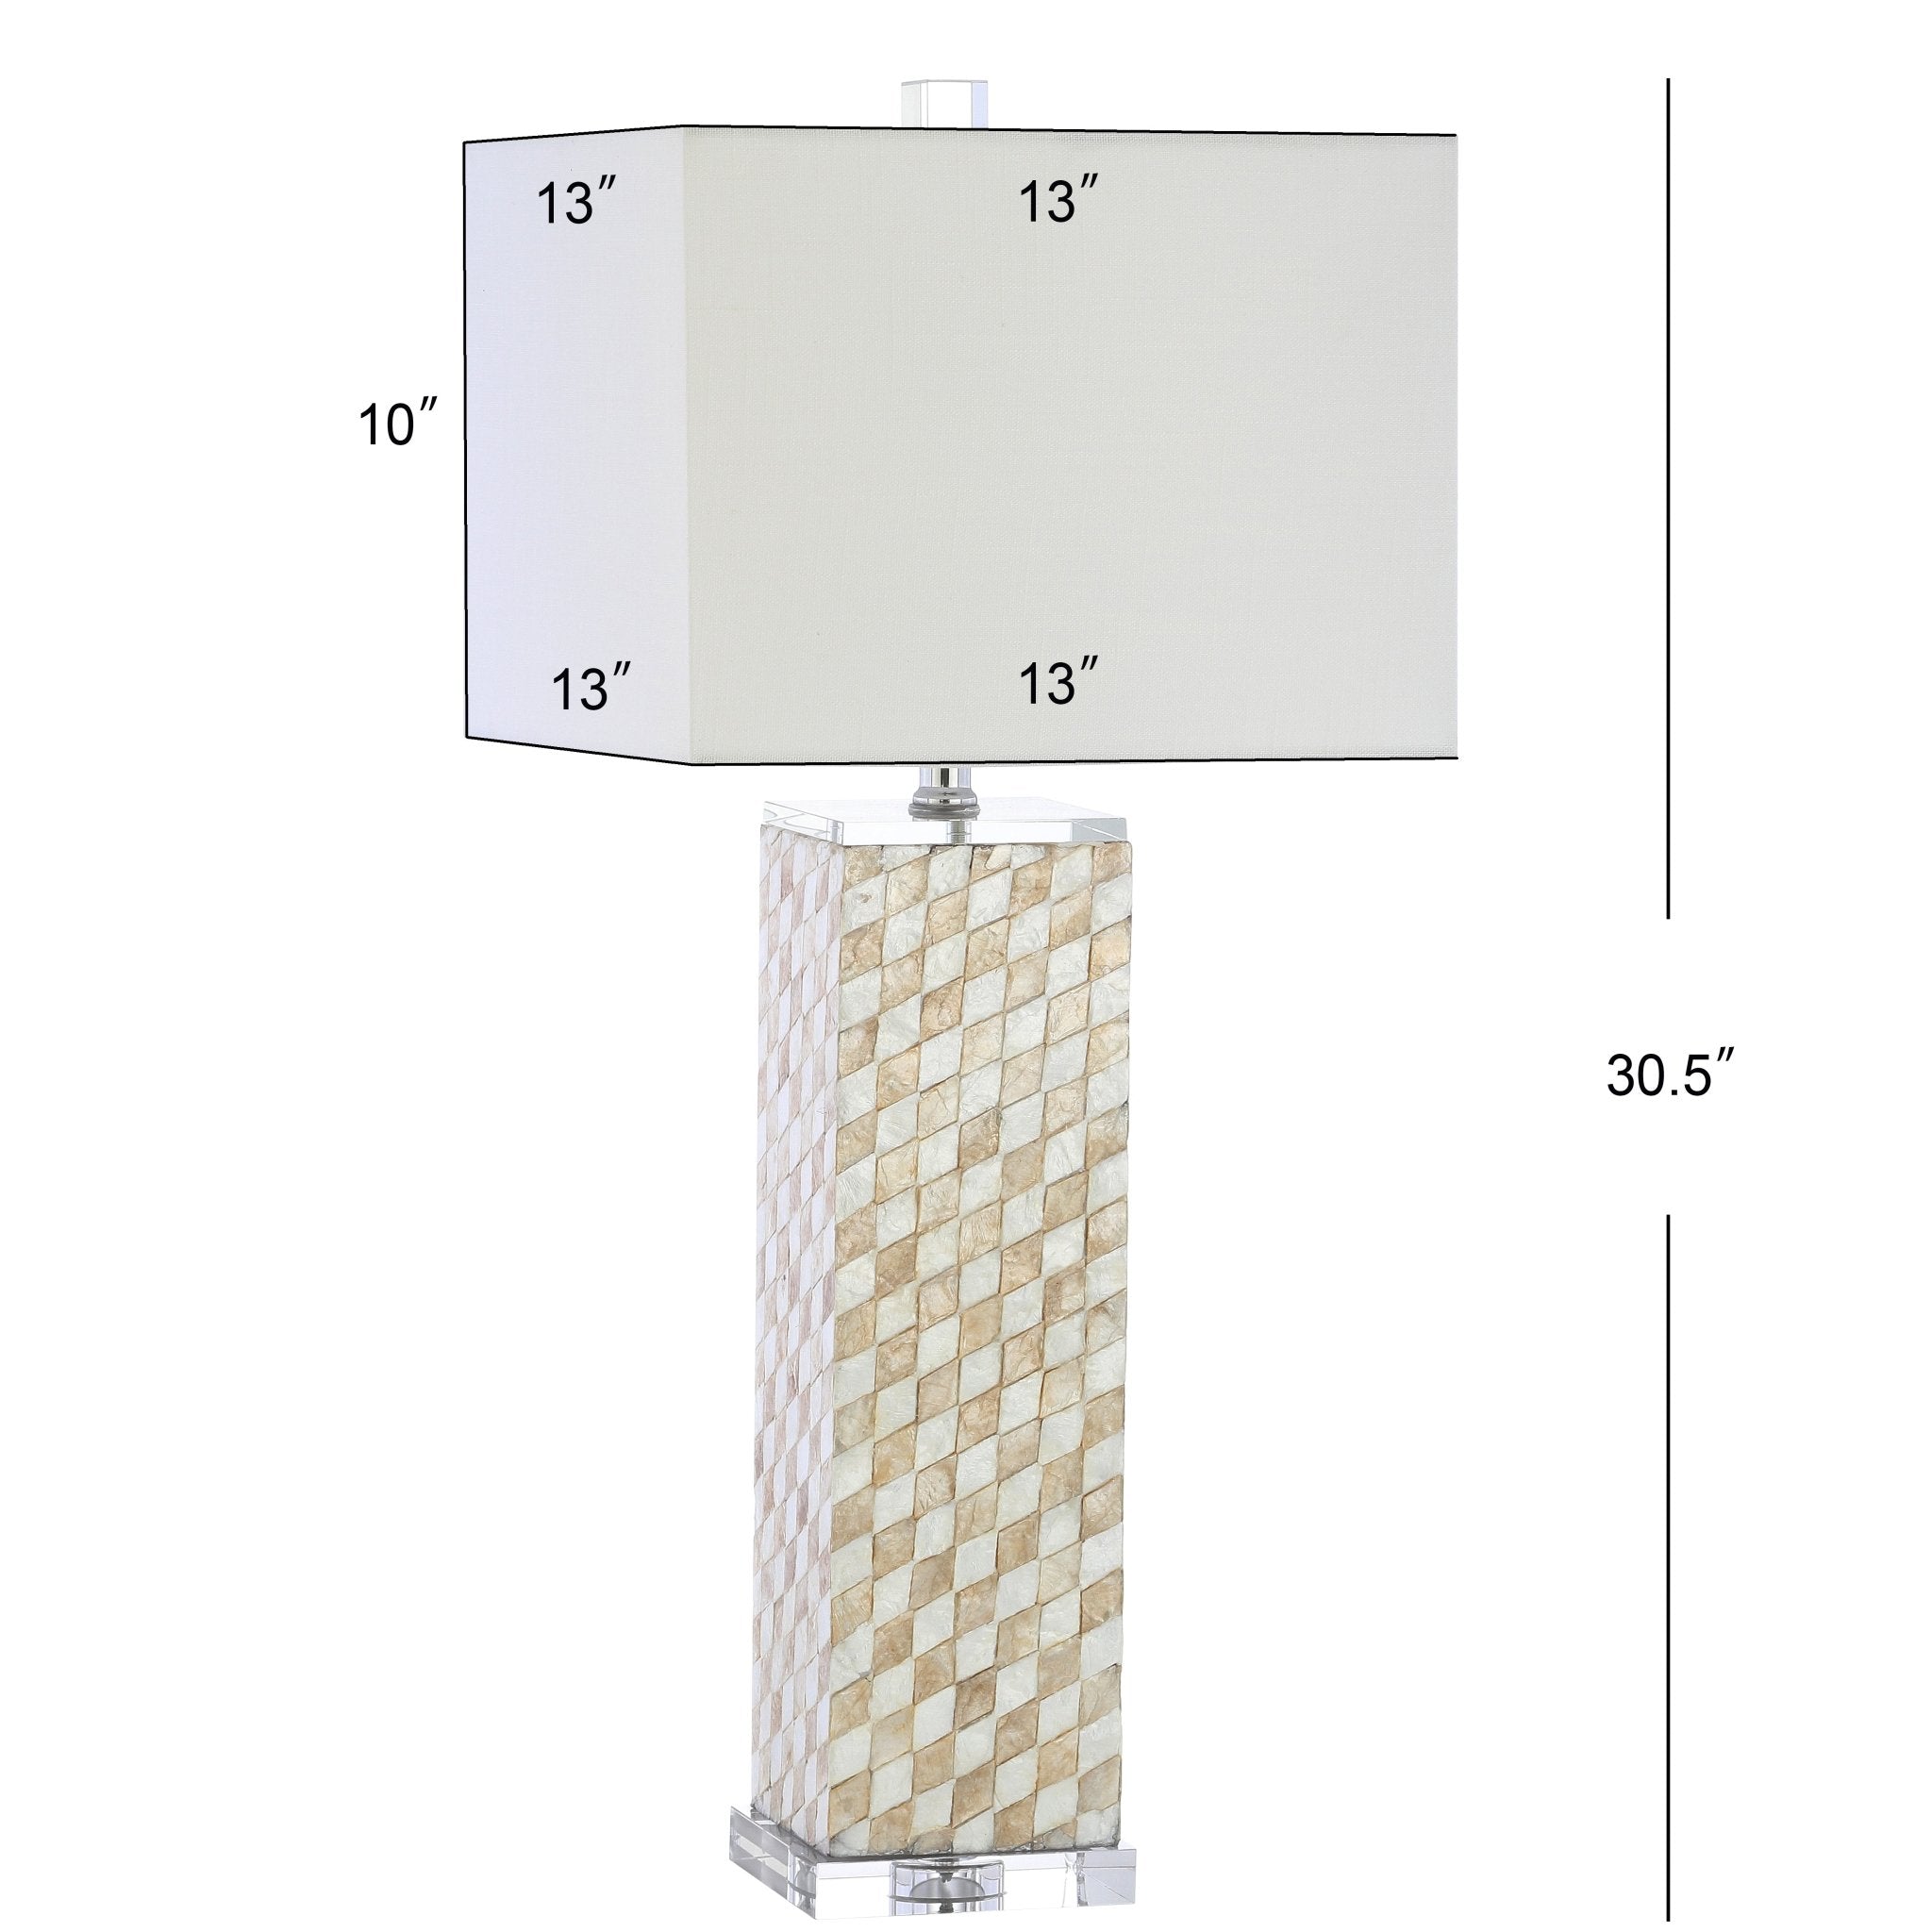 Daniel Seashell/Crystal LED Table Lamp - Pier 1